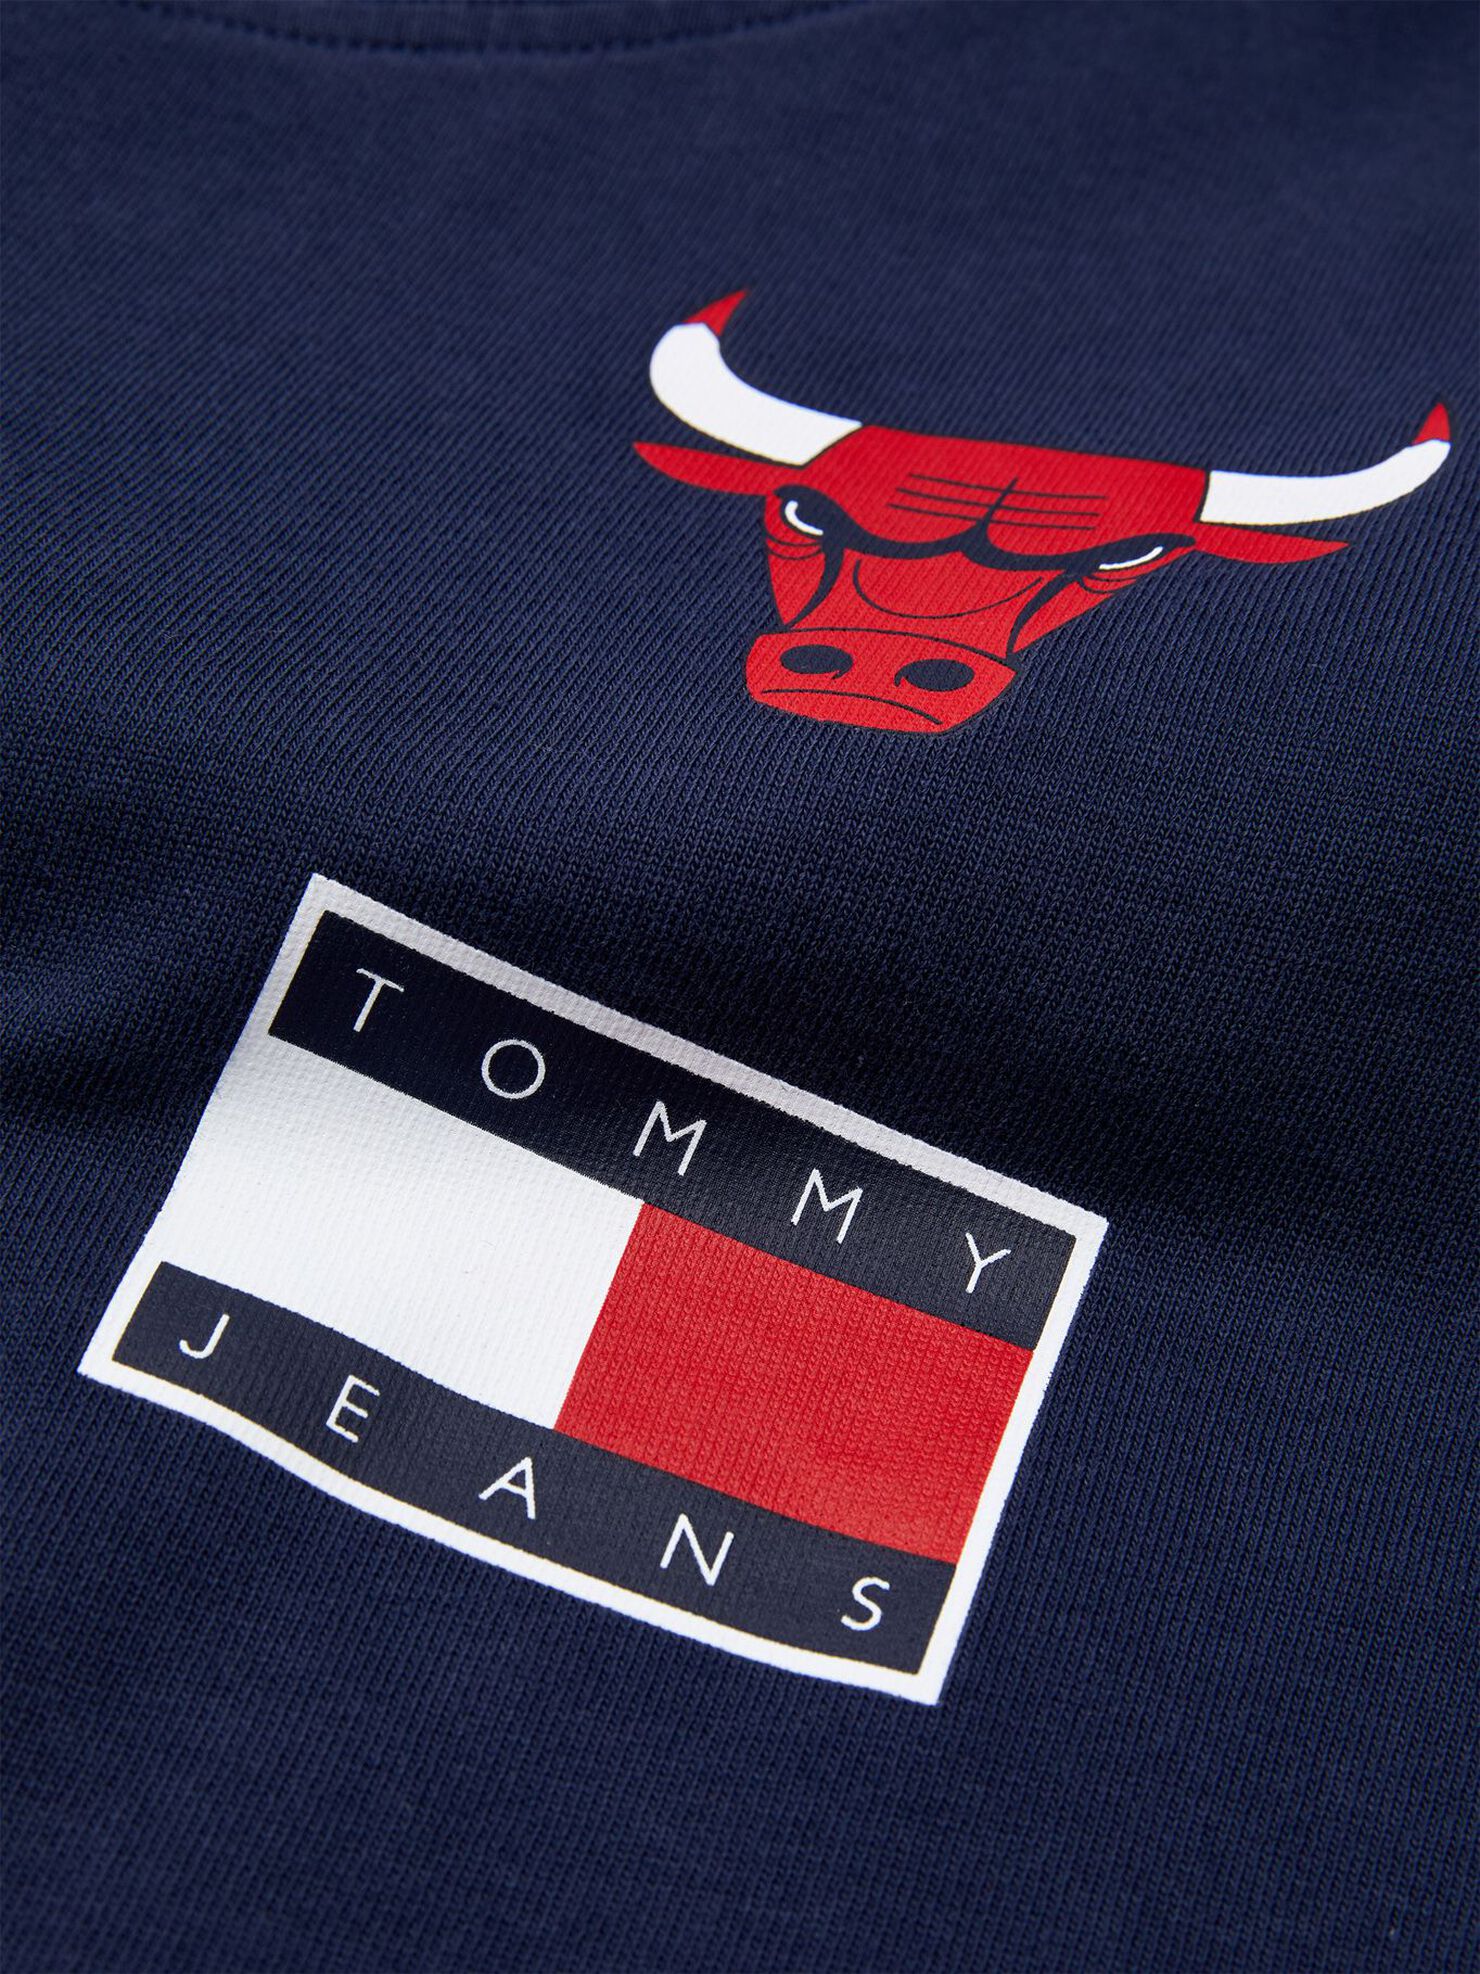 Polera Tjm & Nba Bulls Azul Tommy Hilfiger - Poleras | Paris.cl